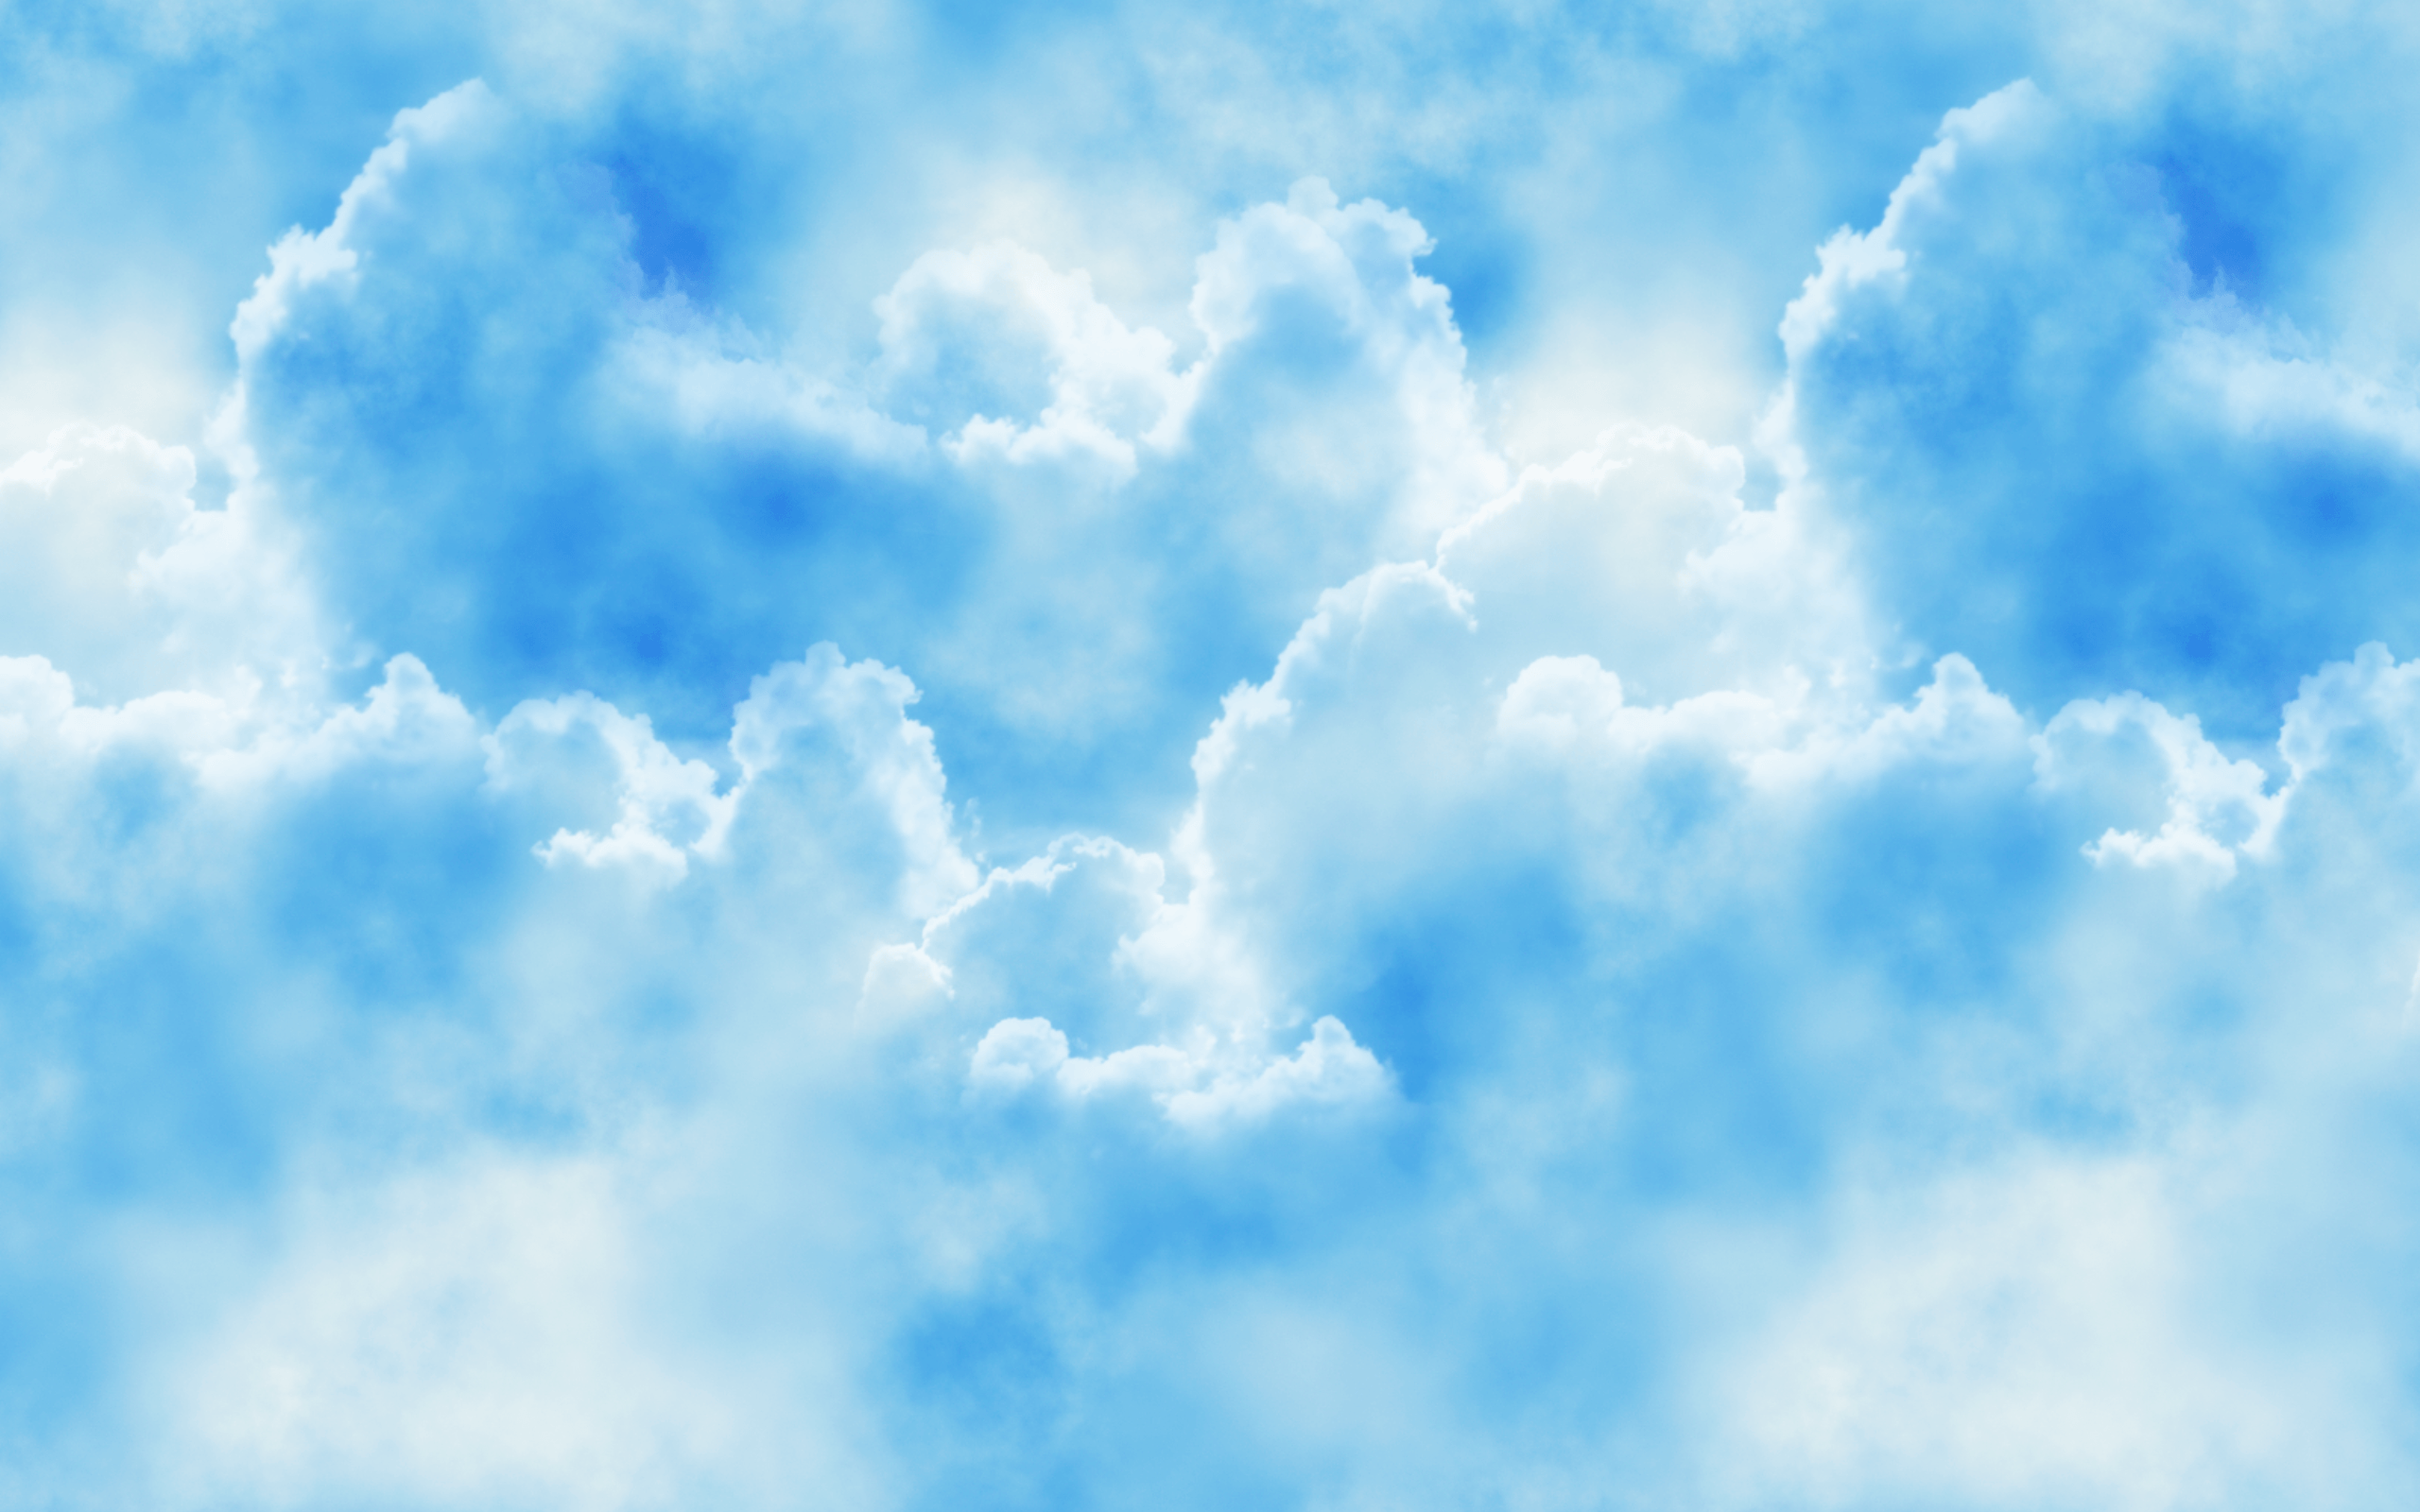 White Clouds in Blue Sky Full HD Wallpaper